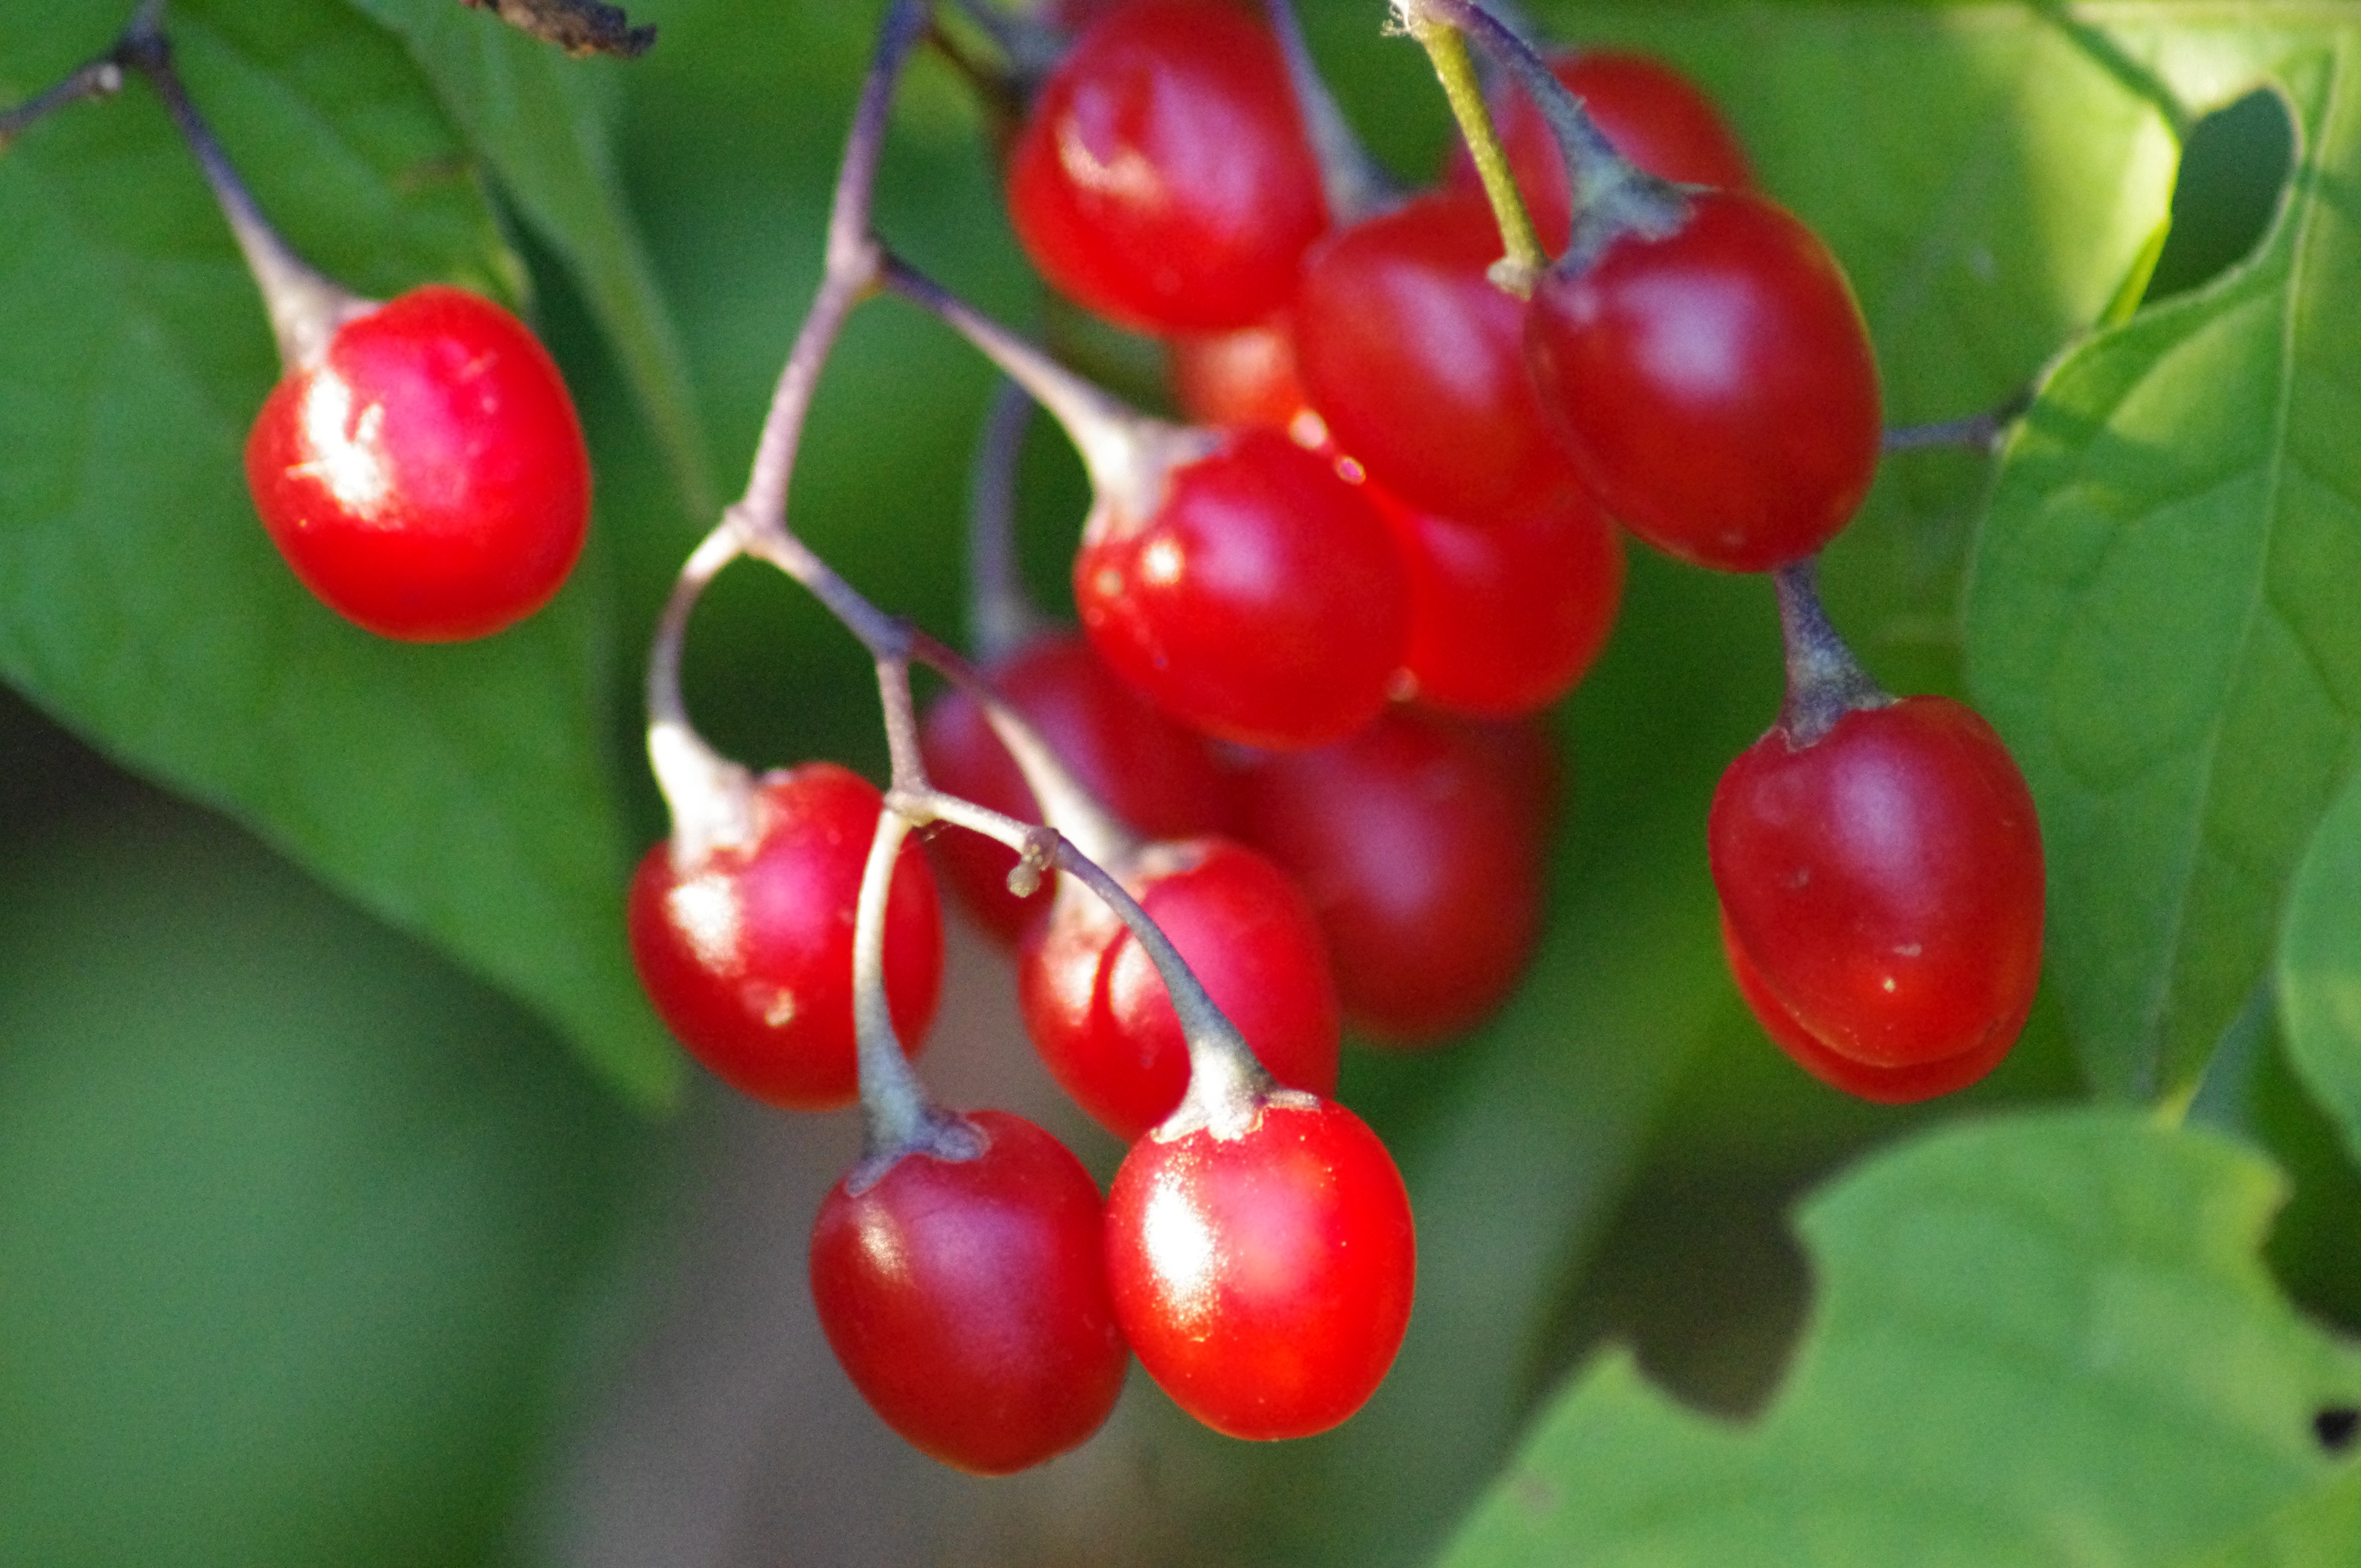 poisonous red berries | jasminerose